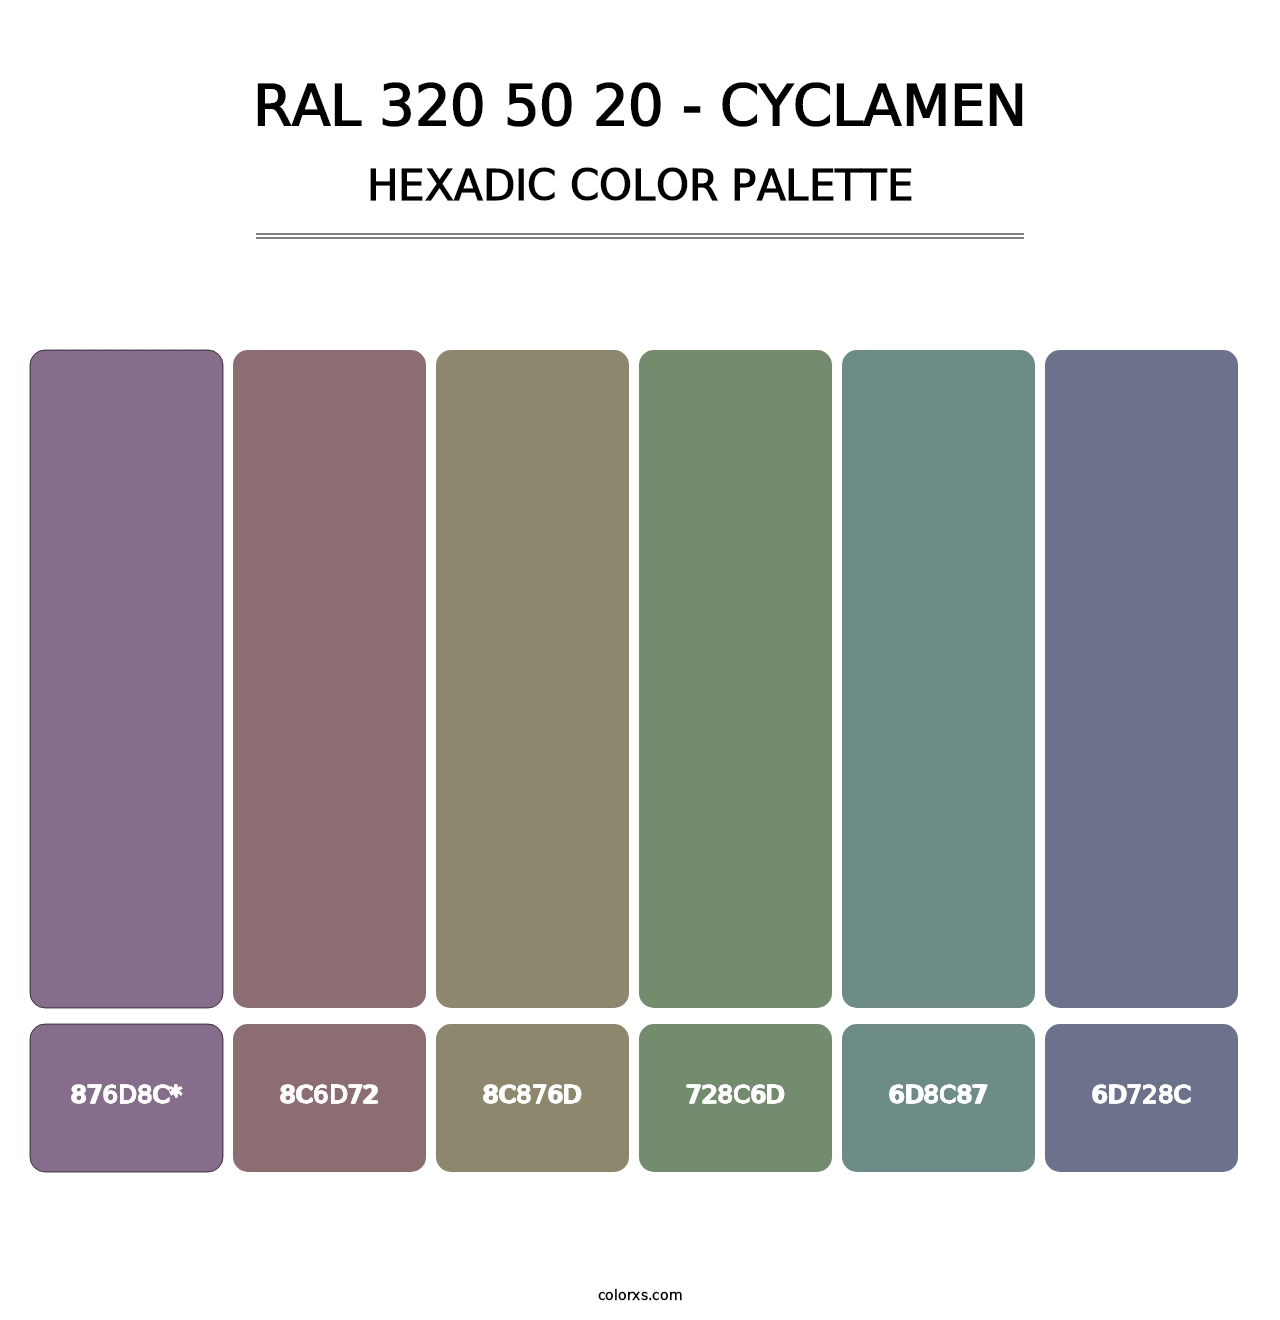 RAL 320 50 20 - Cyclamen - Hexadic Color Palette